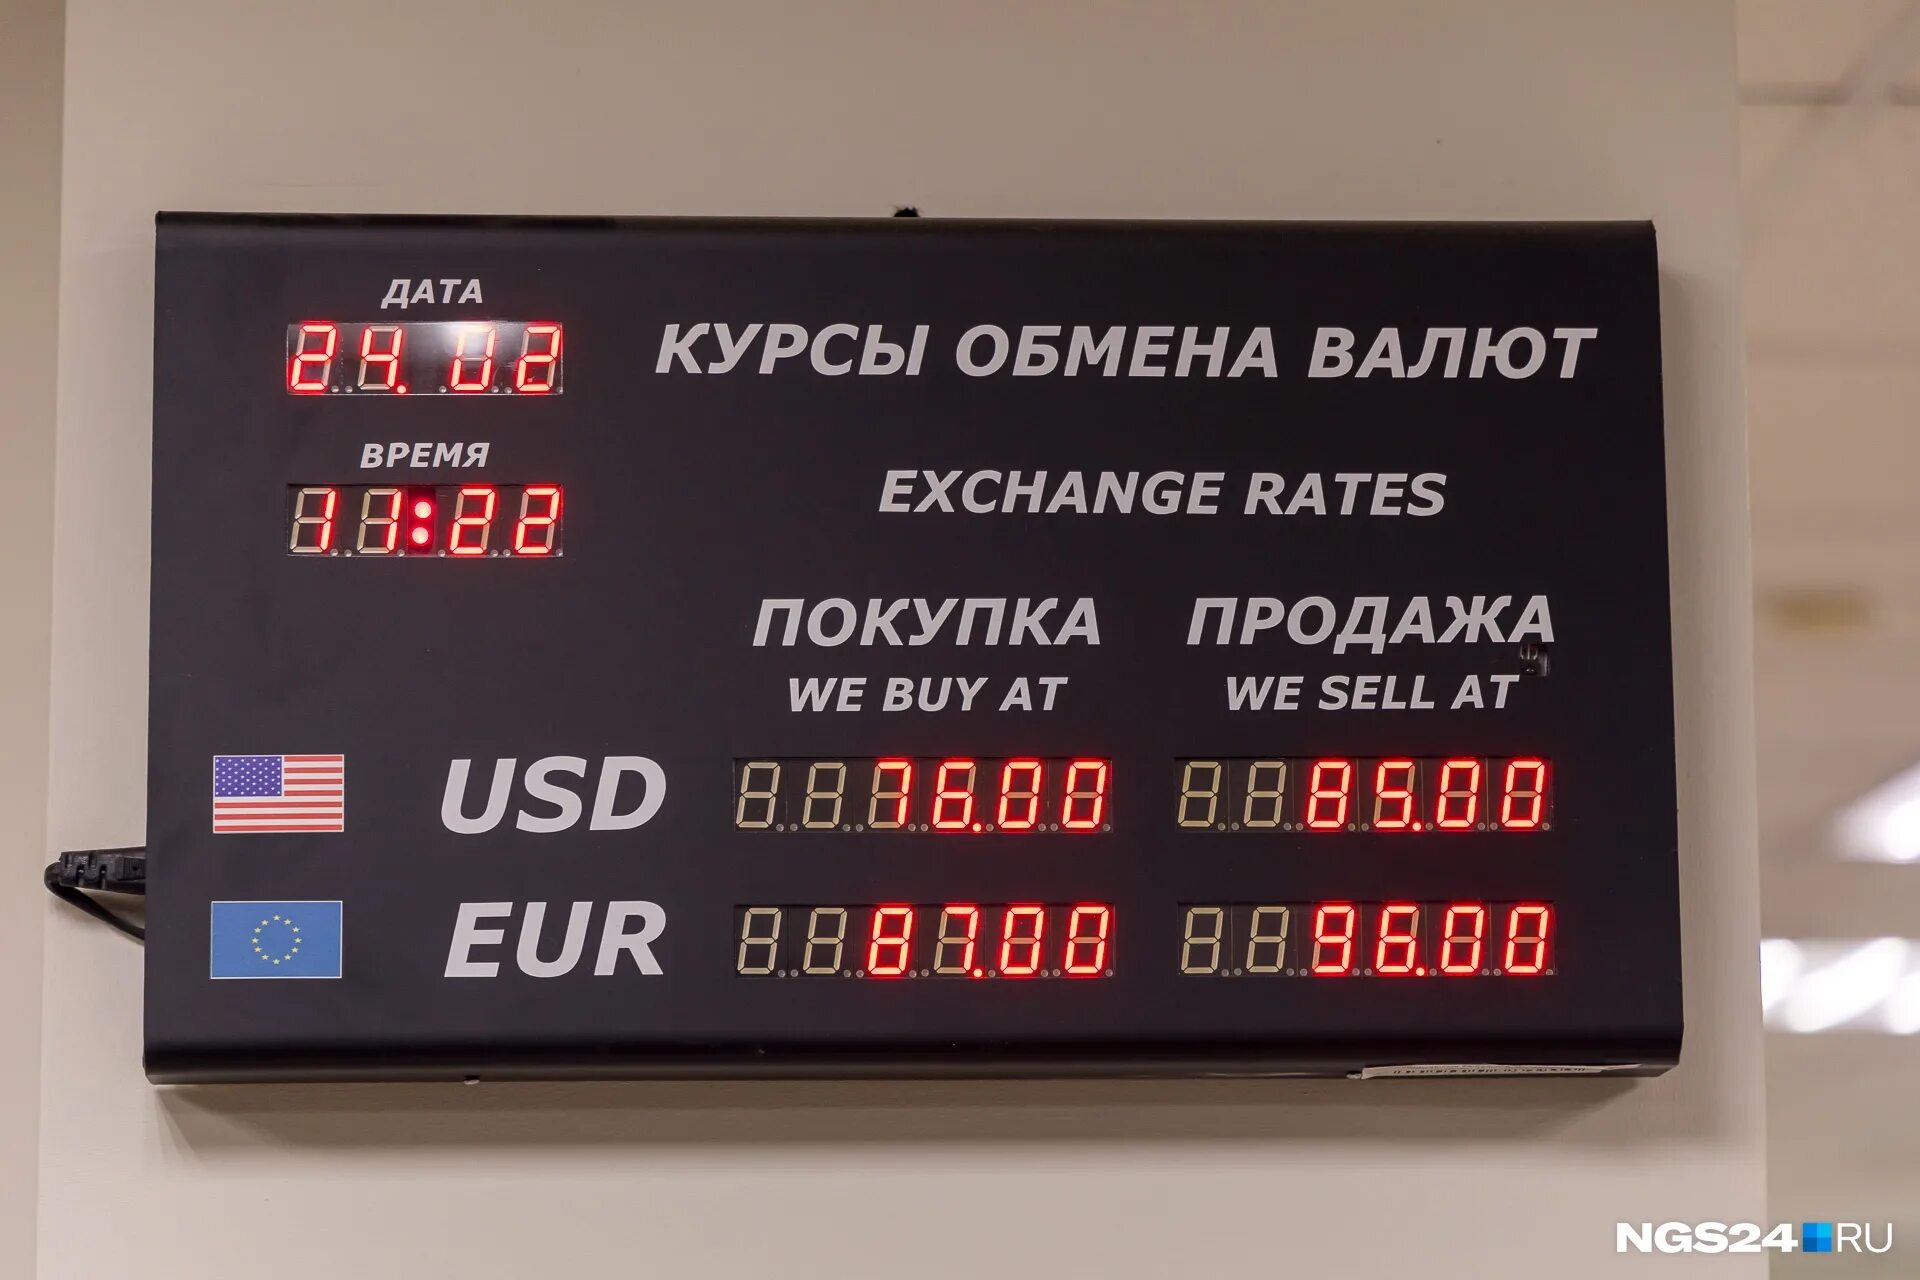 Обменник валют. Курсы обмена валют. Обменные курсы валют. Размен валюты.